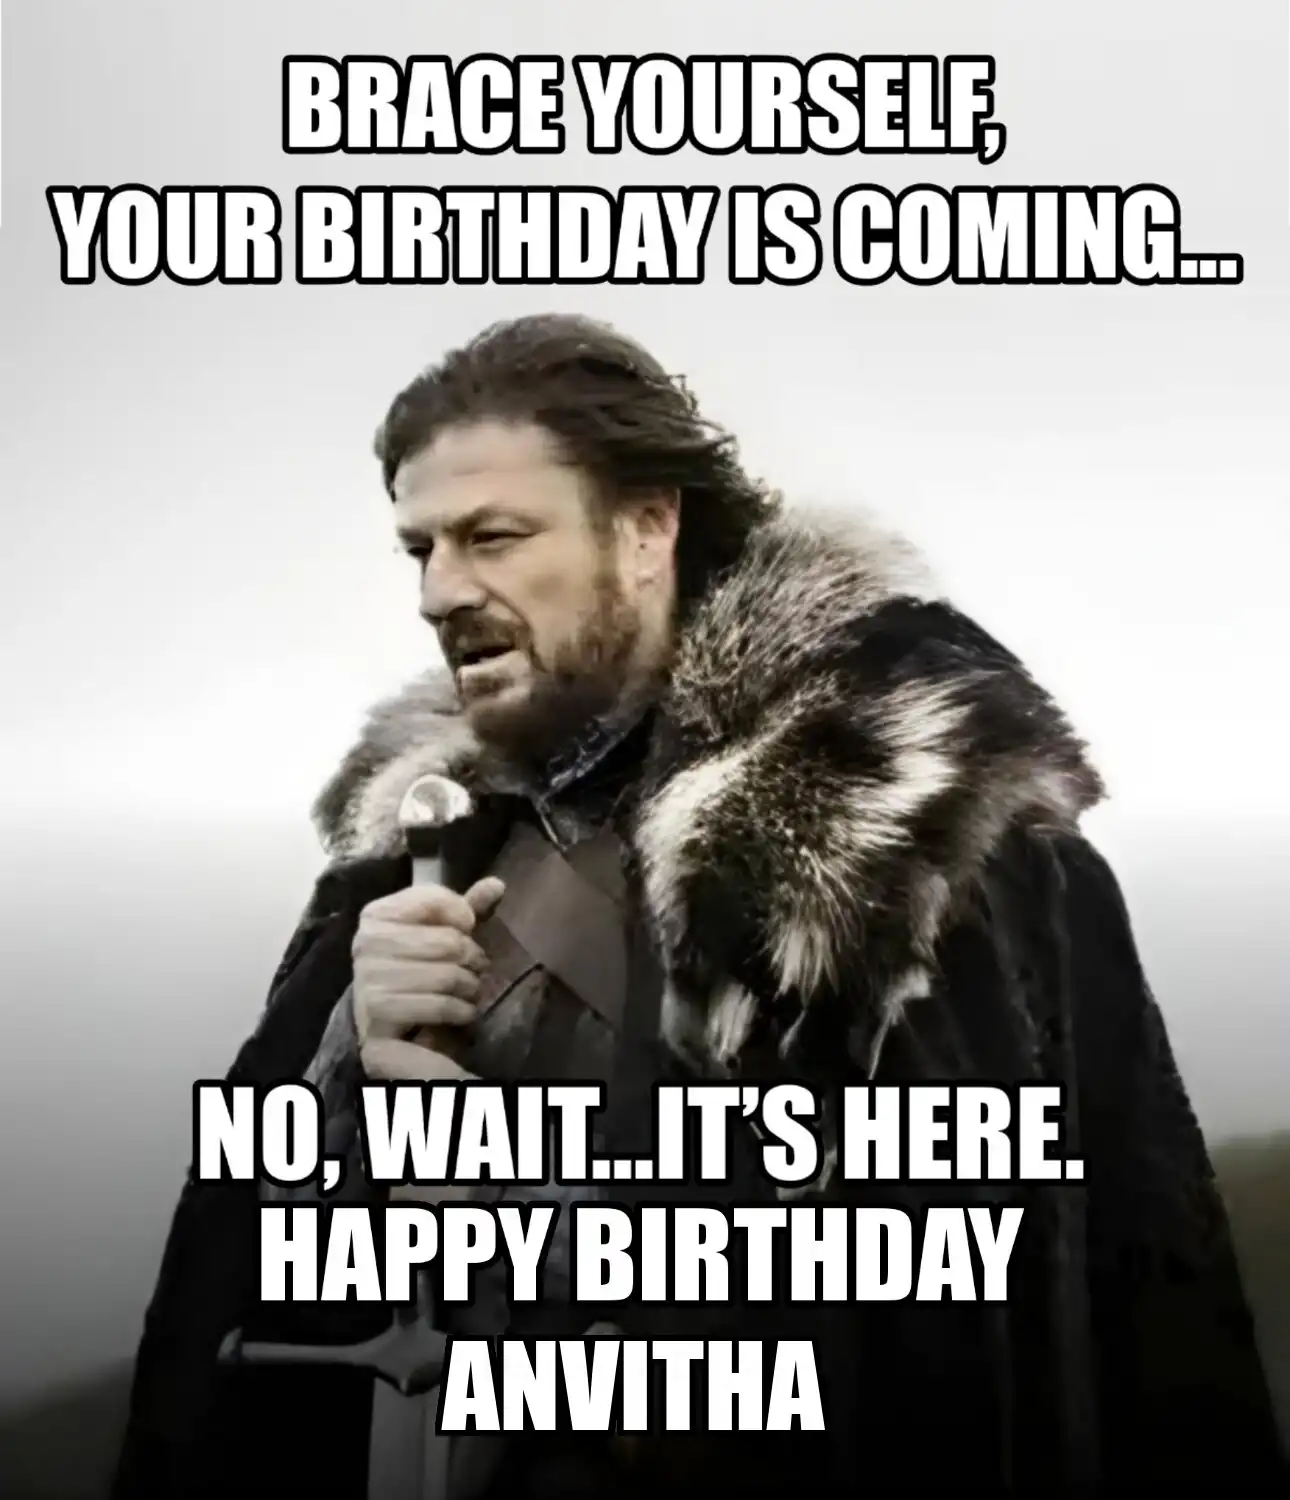 Happy Birthday Anvitha Brace Yourself Your Birthday Is Coming Meme